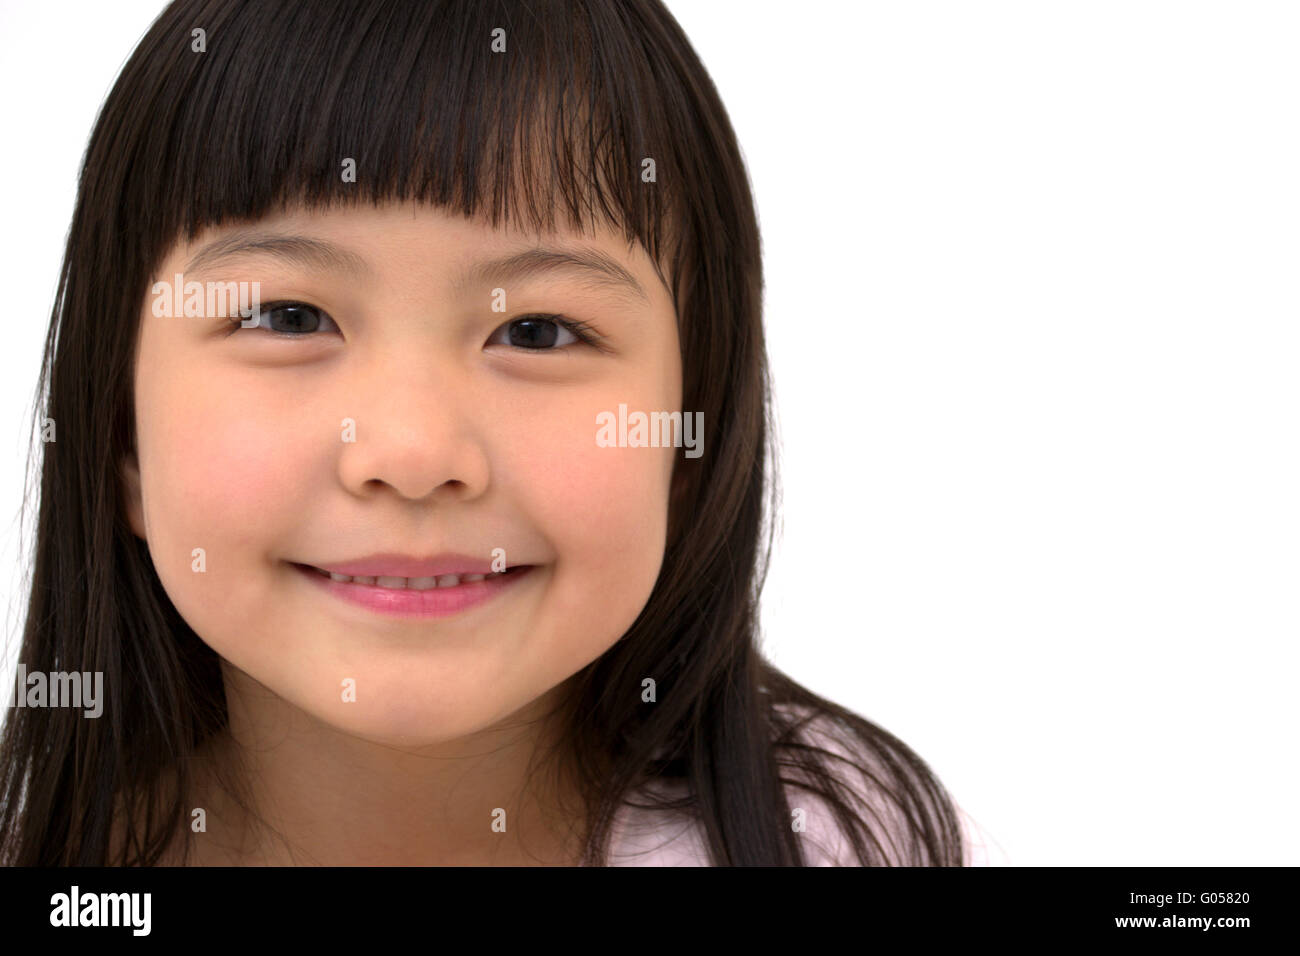 Asian Girl's portrait Stock Photo - Alamy